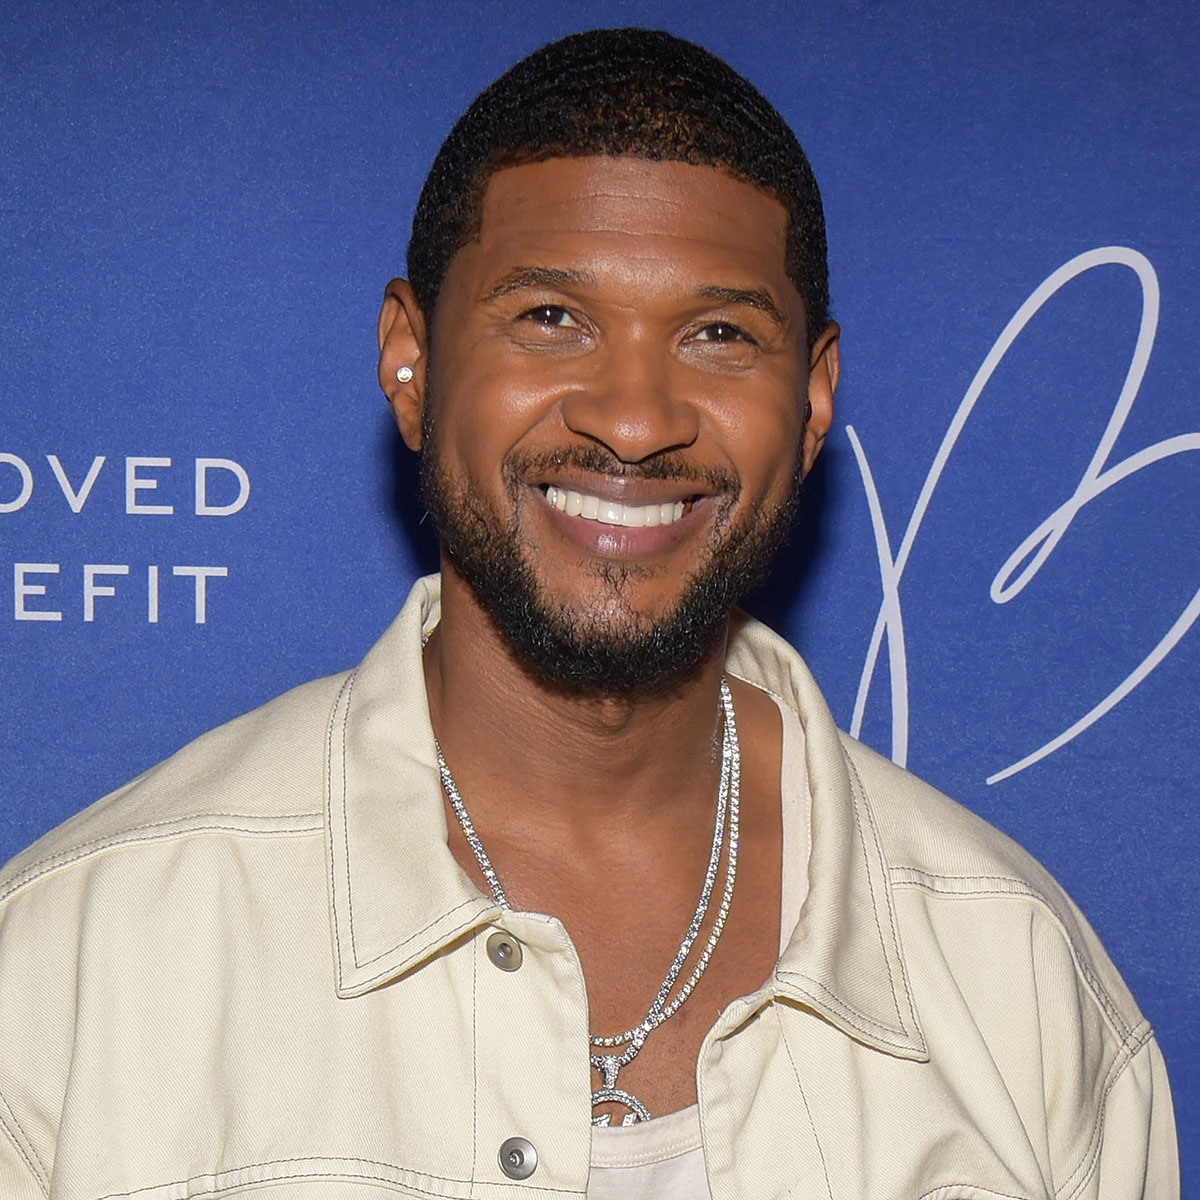 Usher teams up with longtime friend Kim Kardashian for sizzling